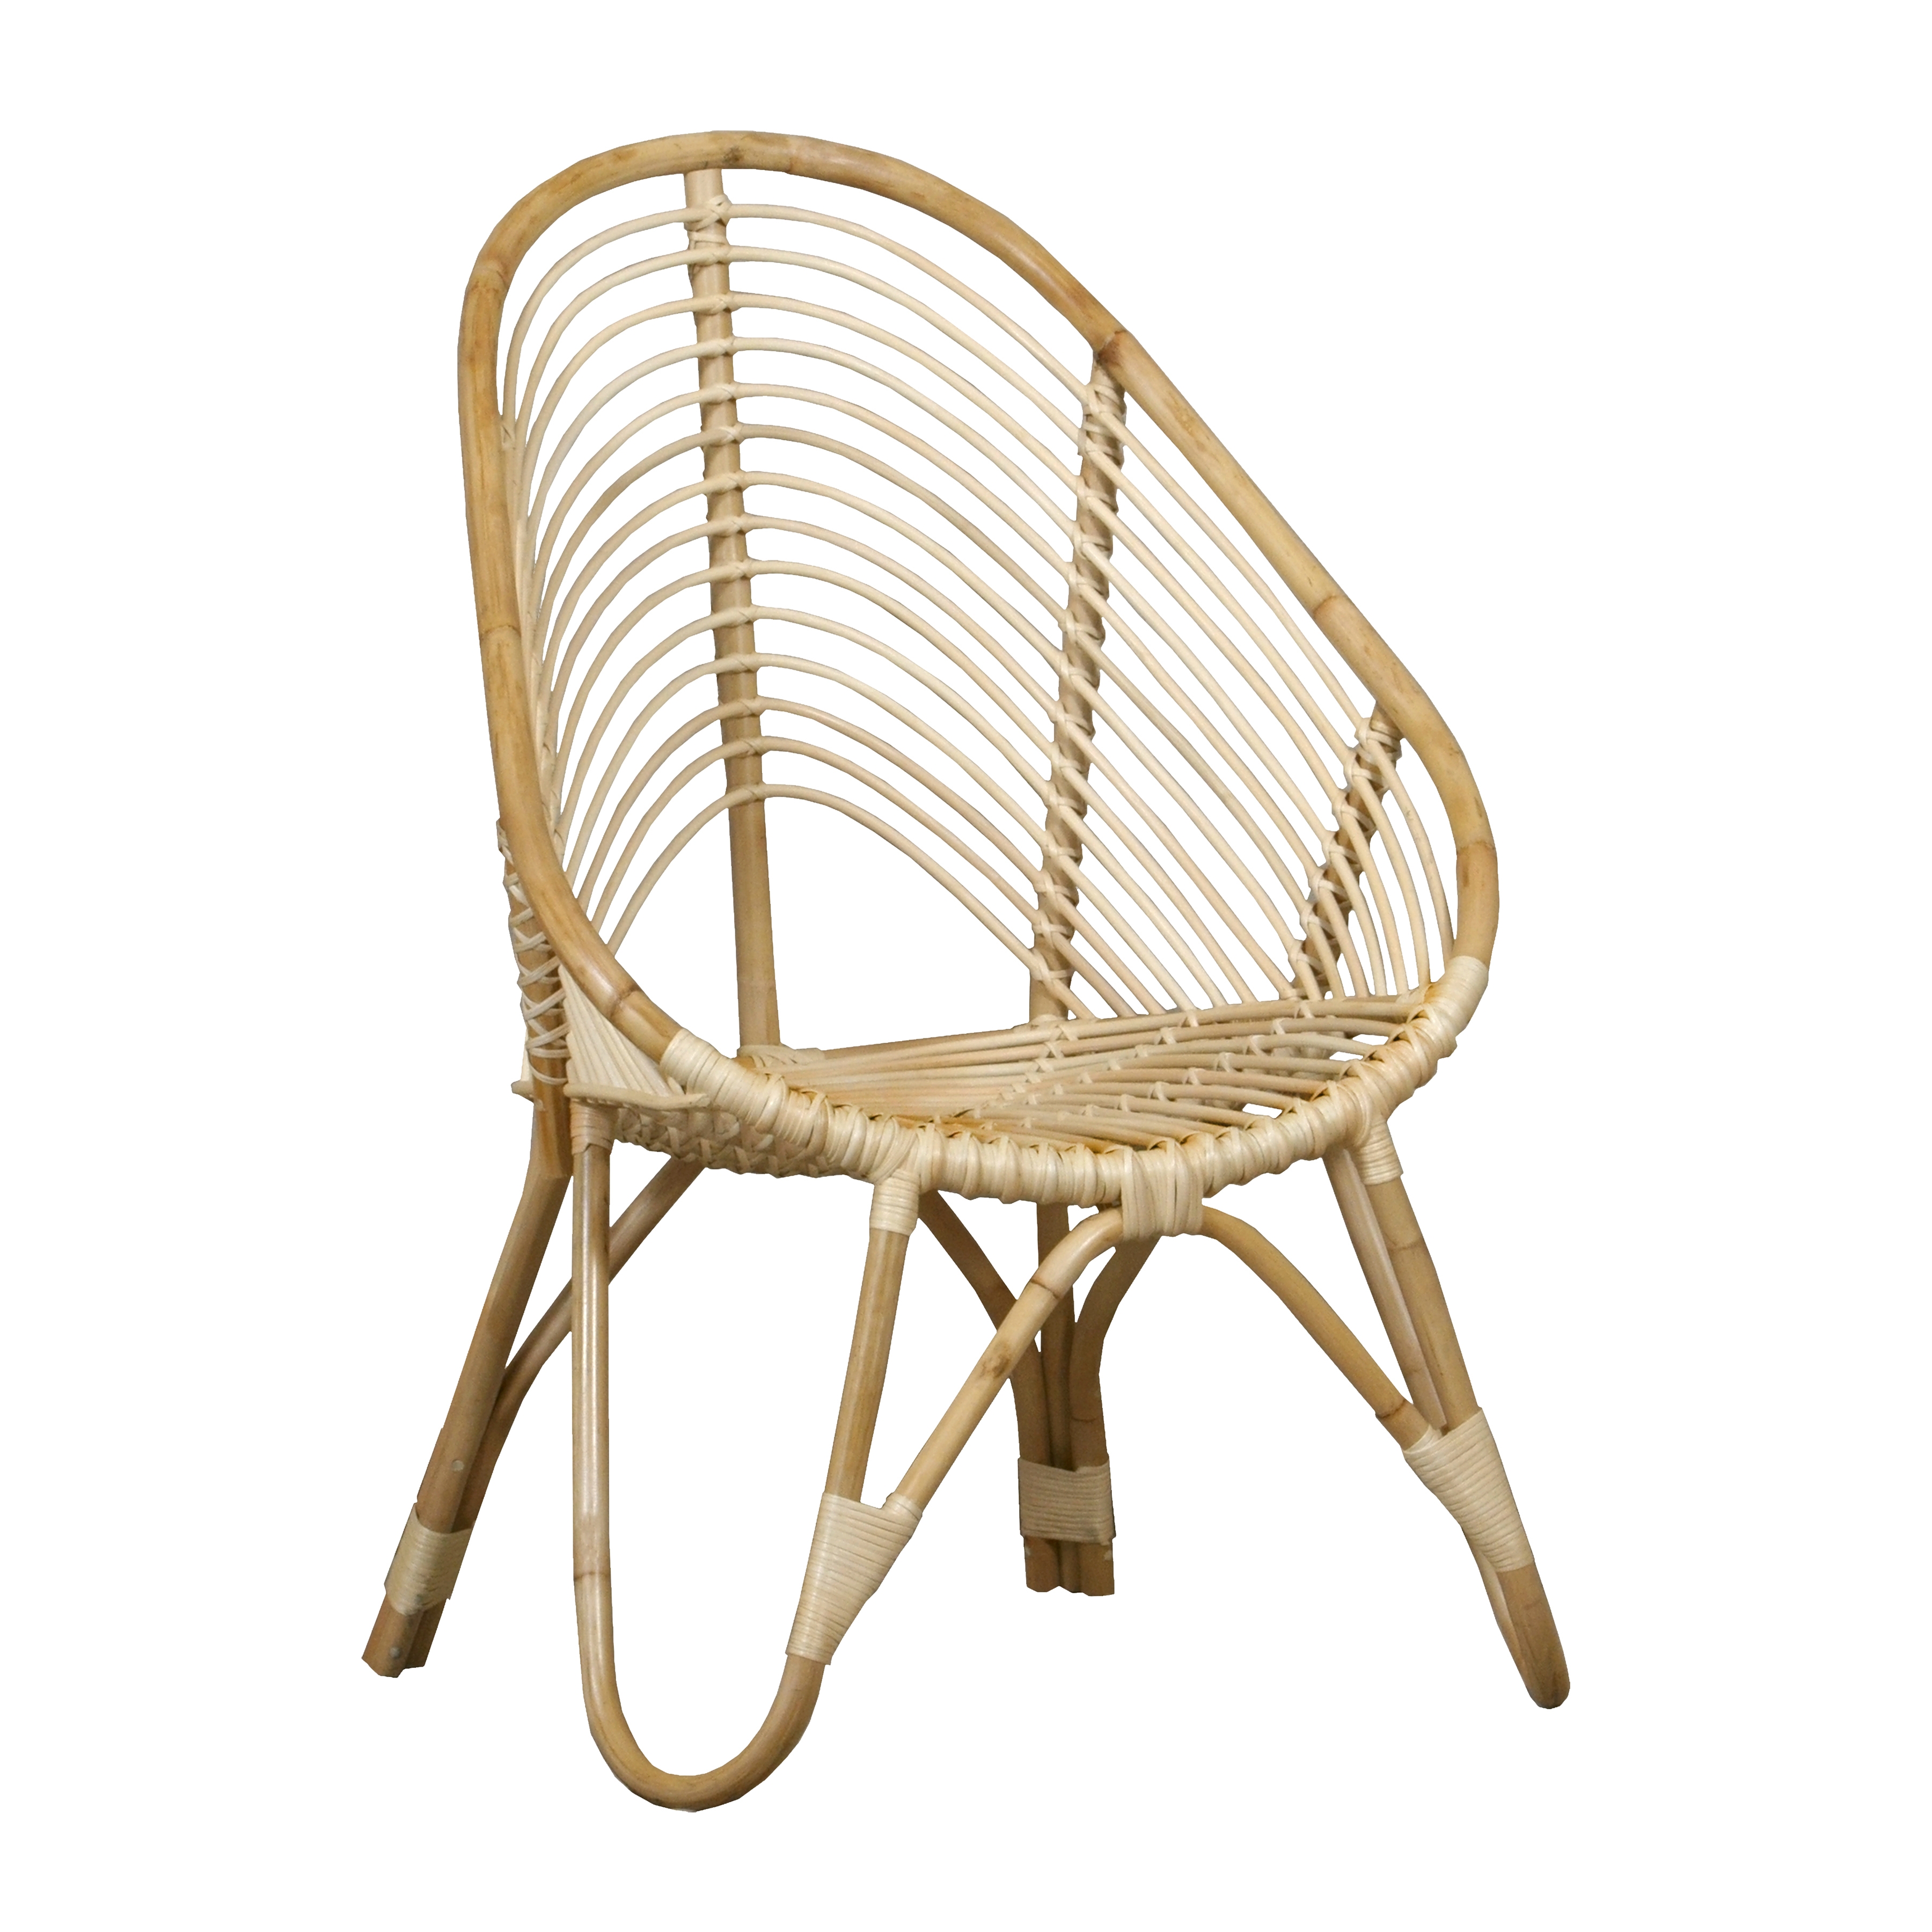 Rendra Chair - Image 1